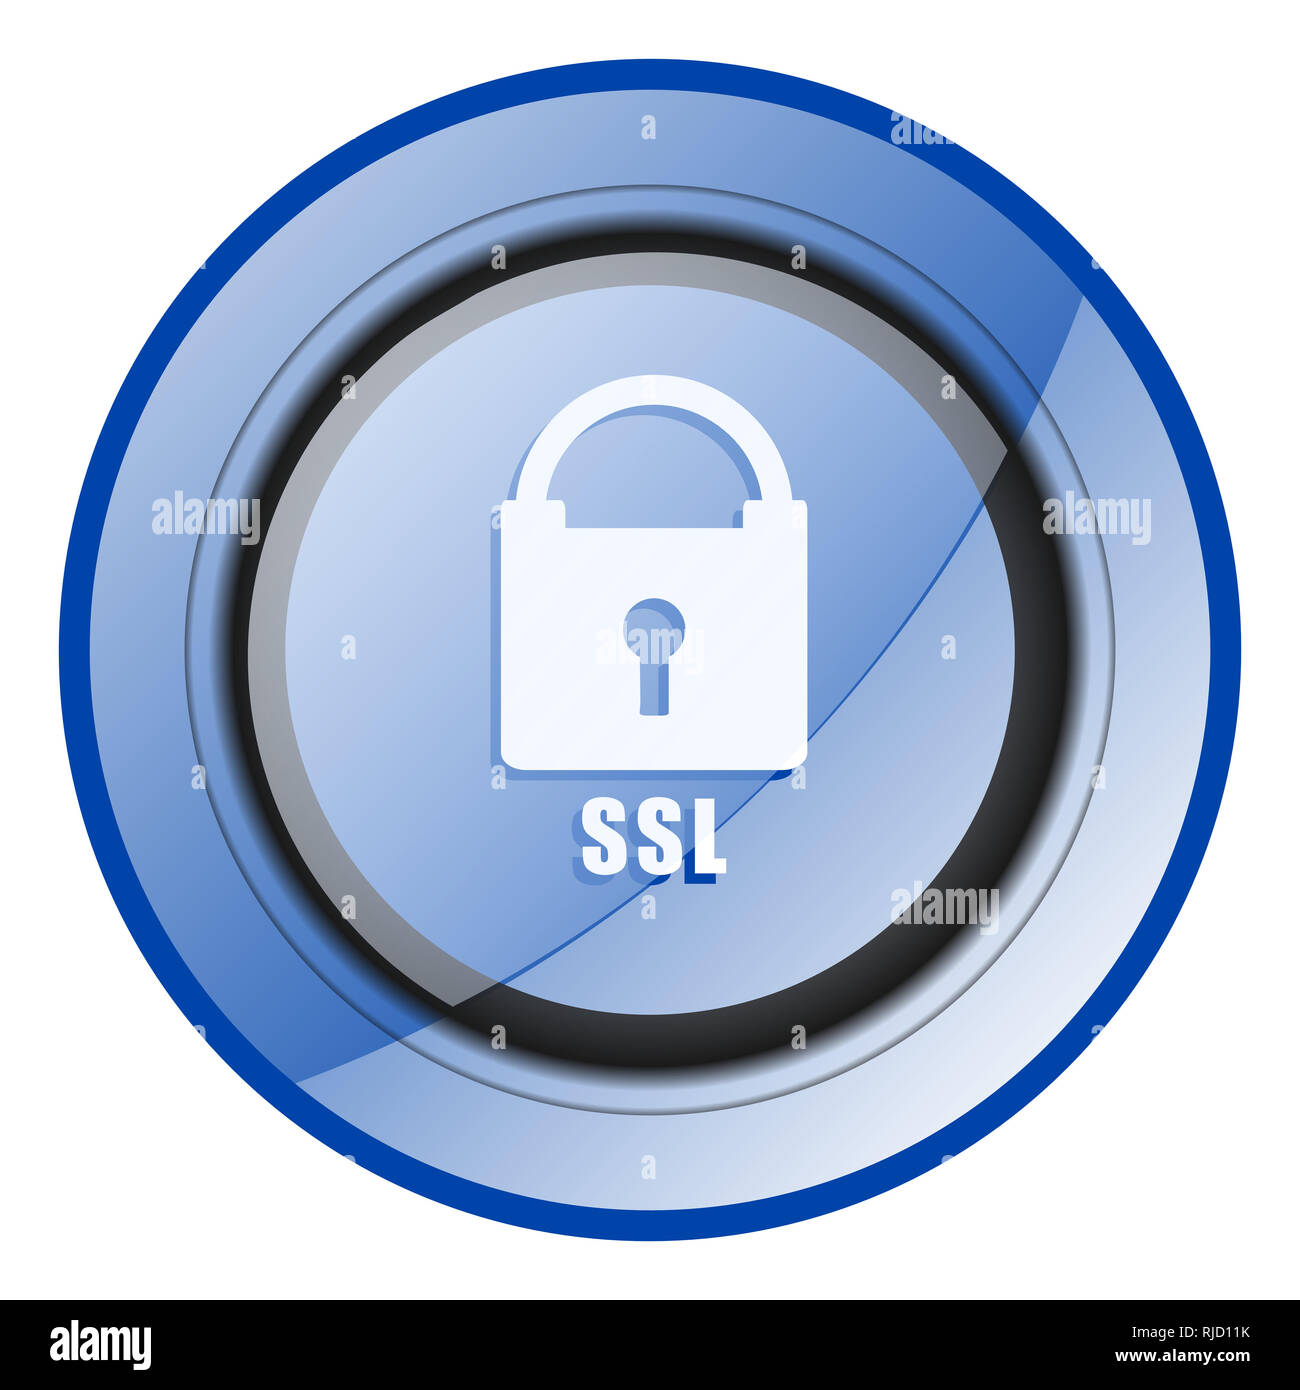 Csl round blue glossy web design icon isolated on white background Stock Photo